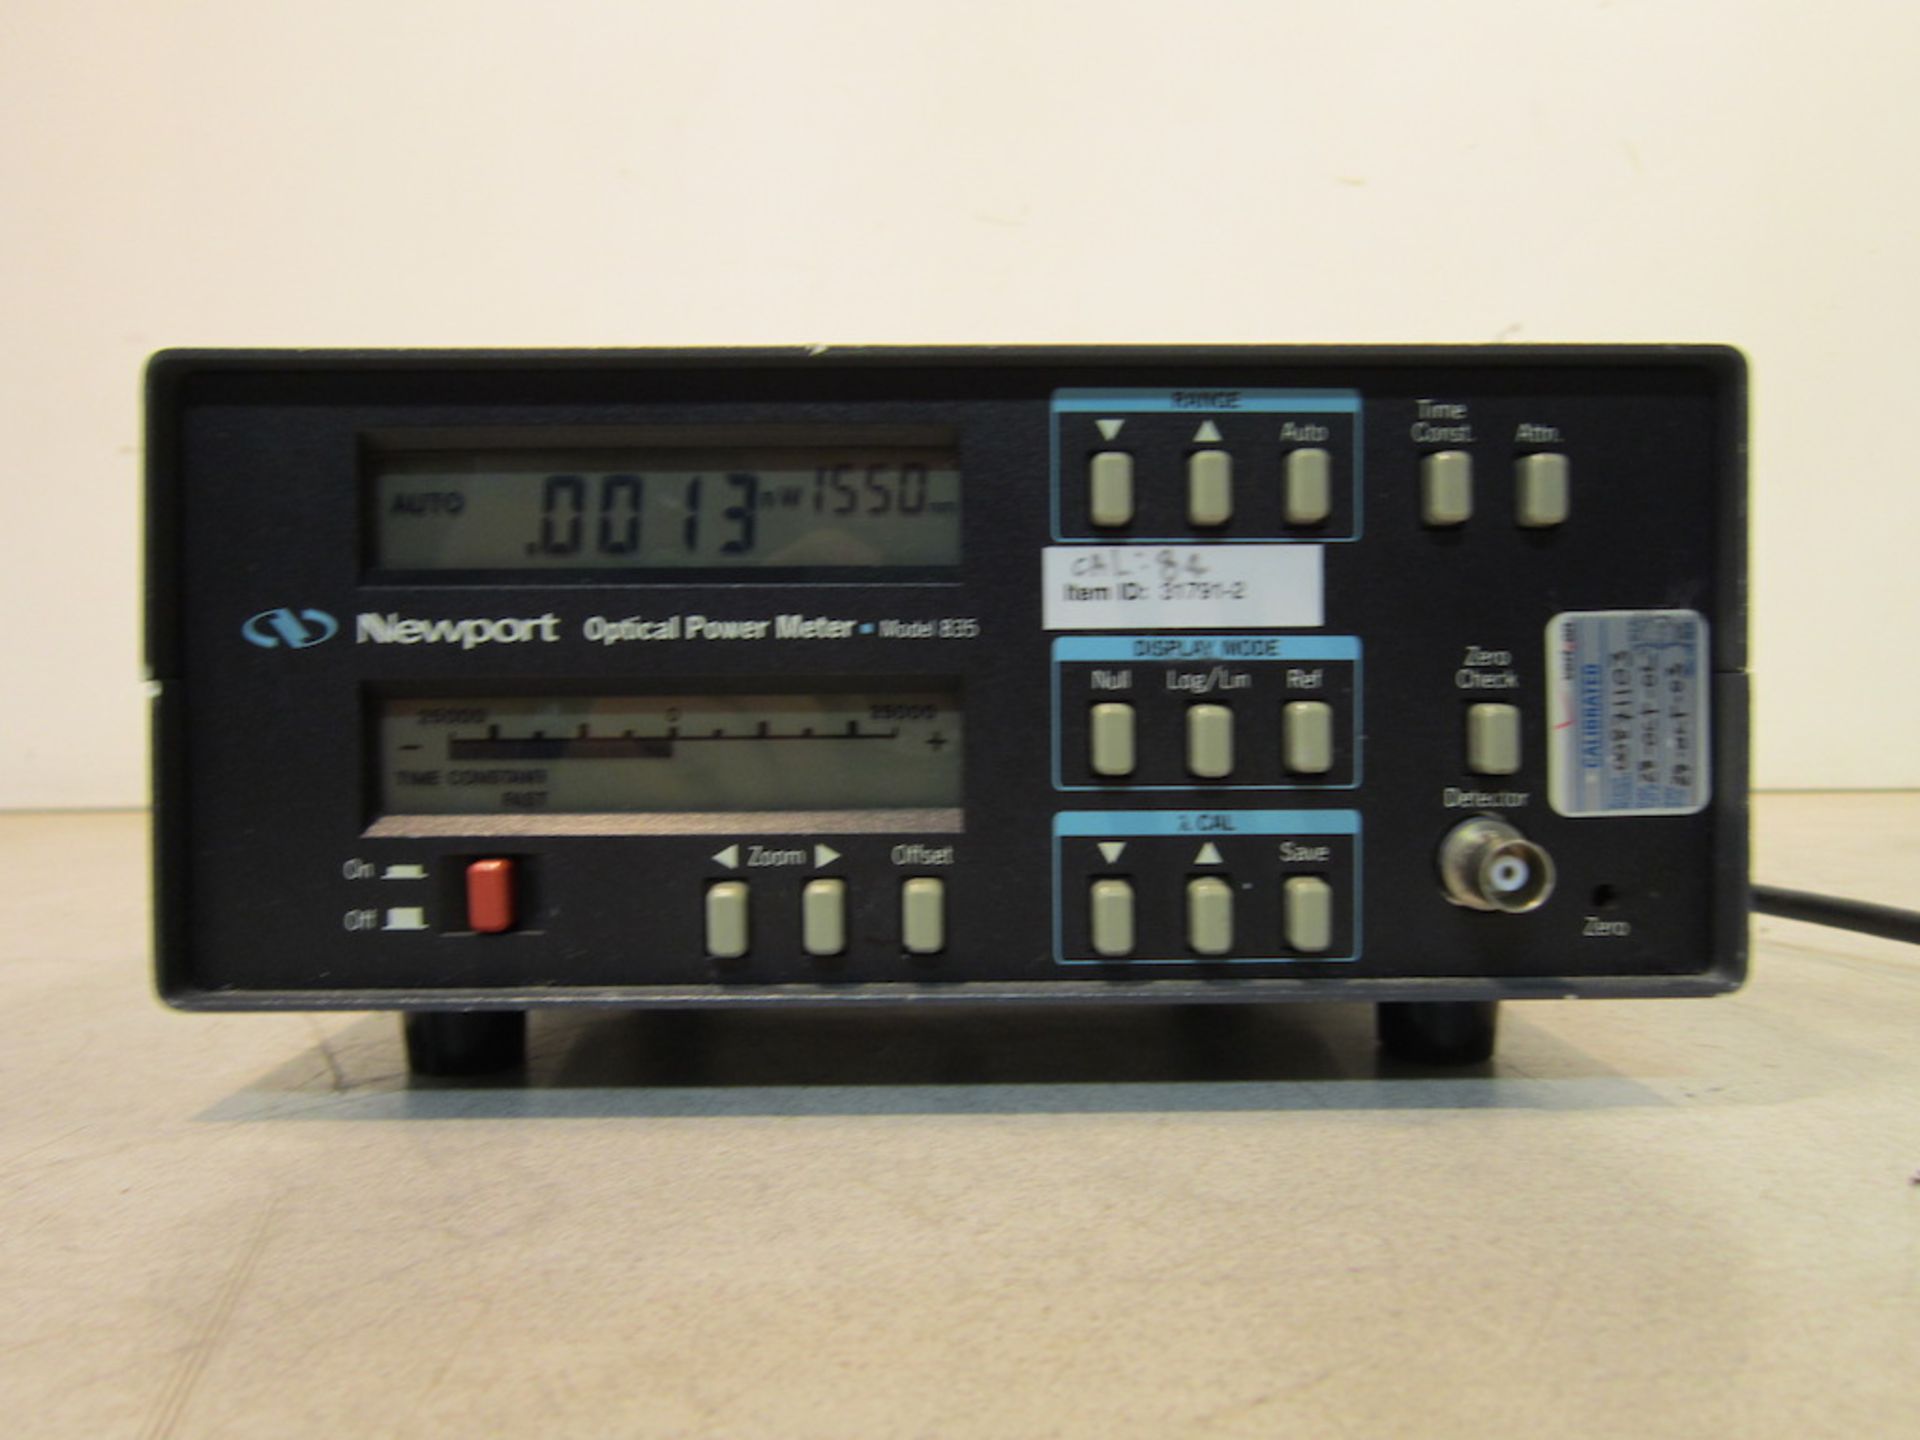 Newport Optical Power Meter 835